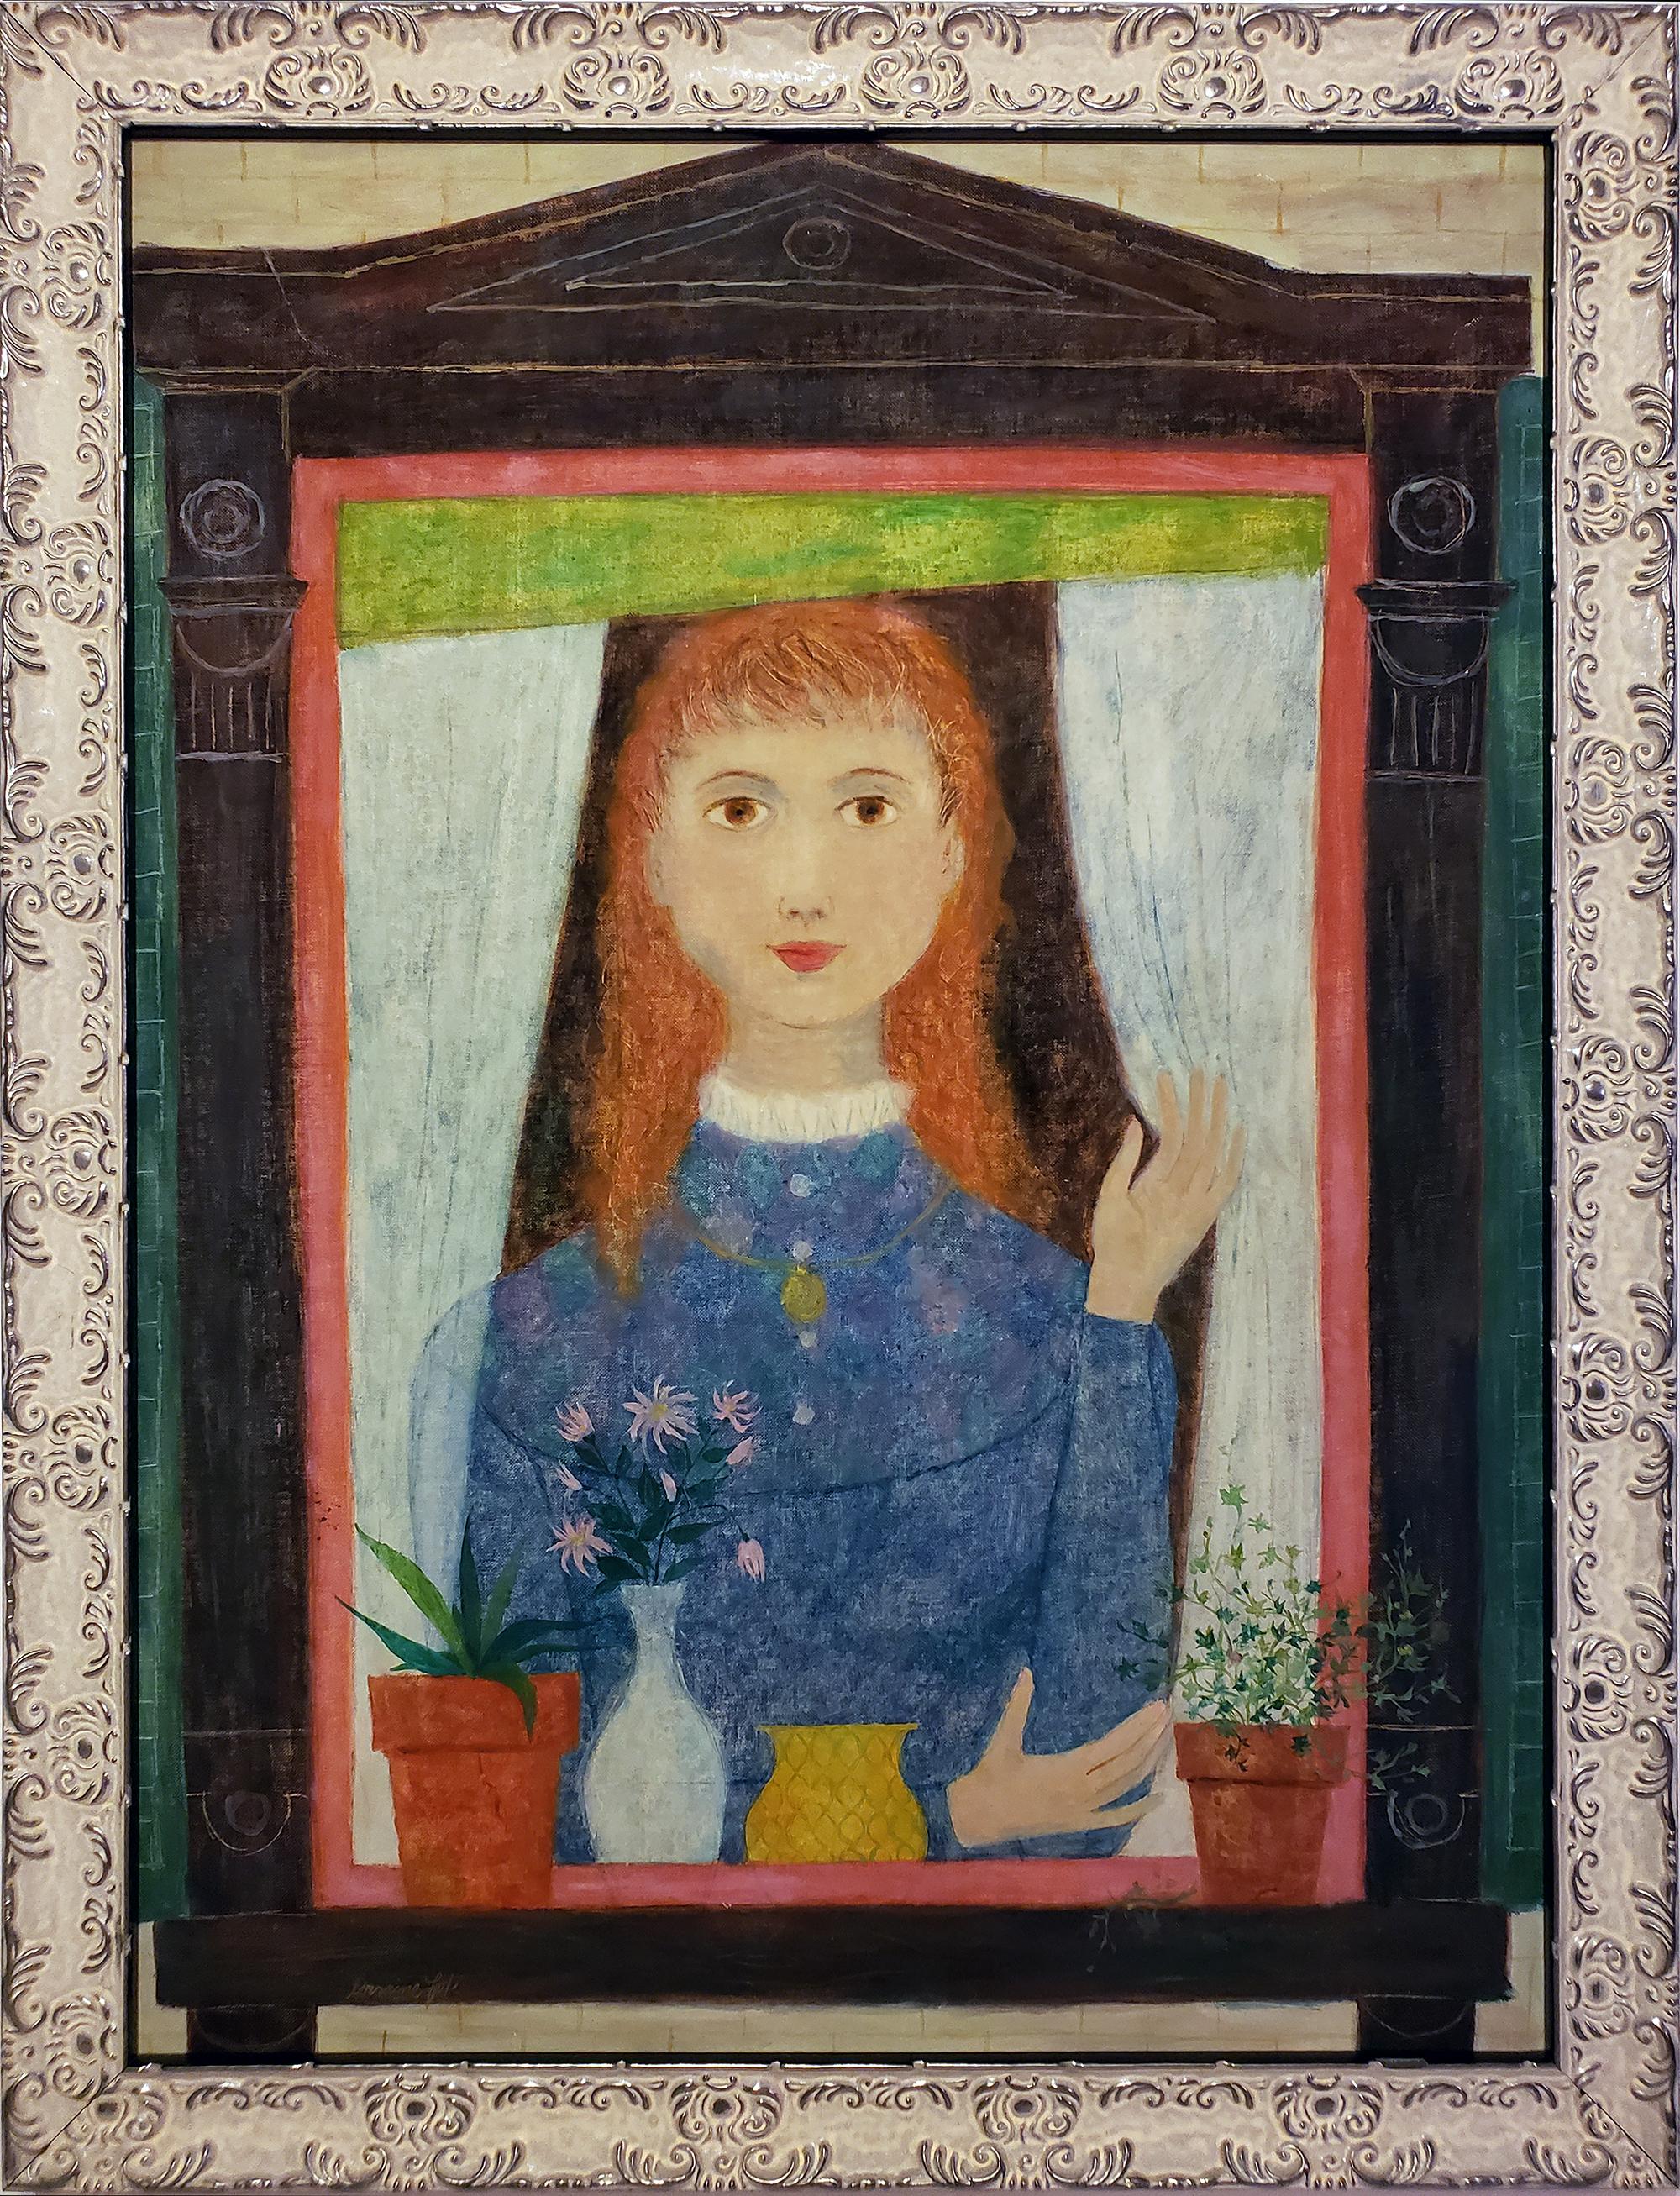 Lorraine Fox Figurative Painting - Redhead Girl in Window with Flower Pots, 